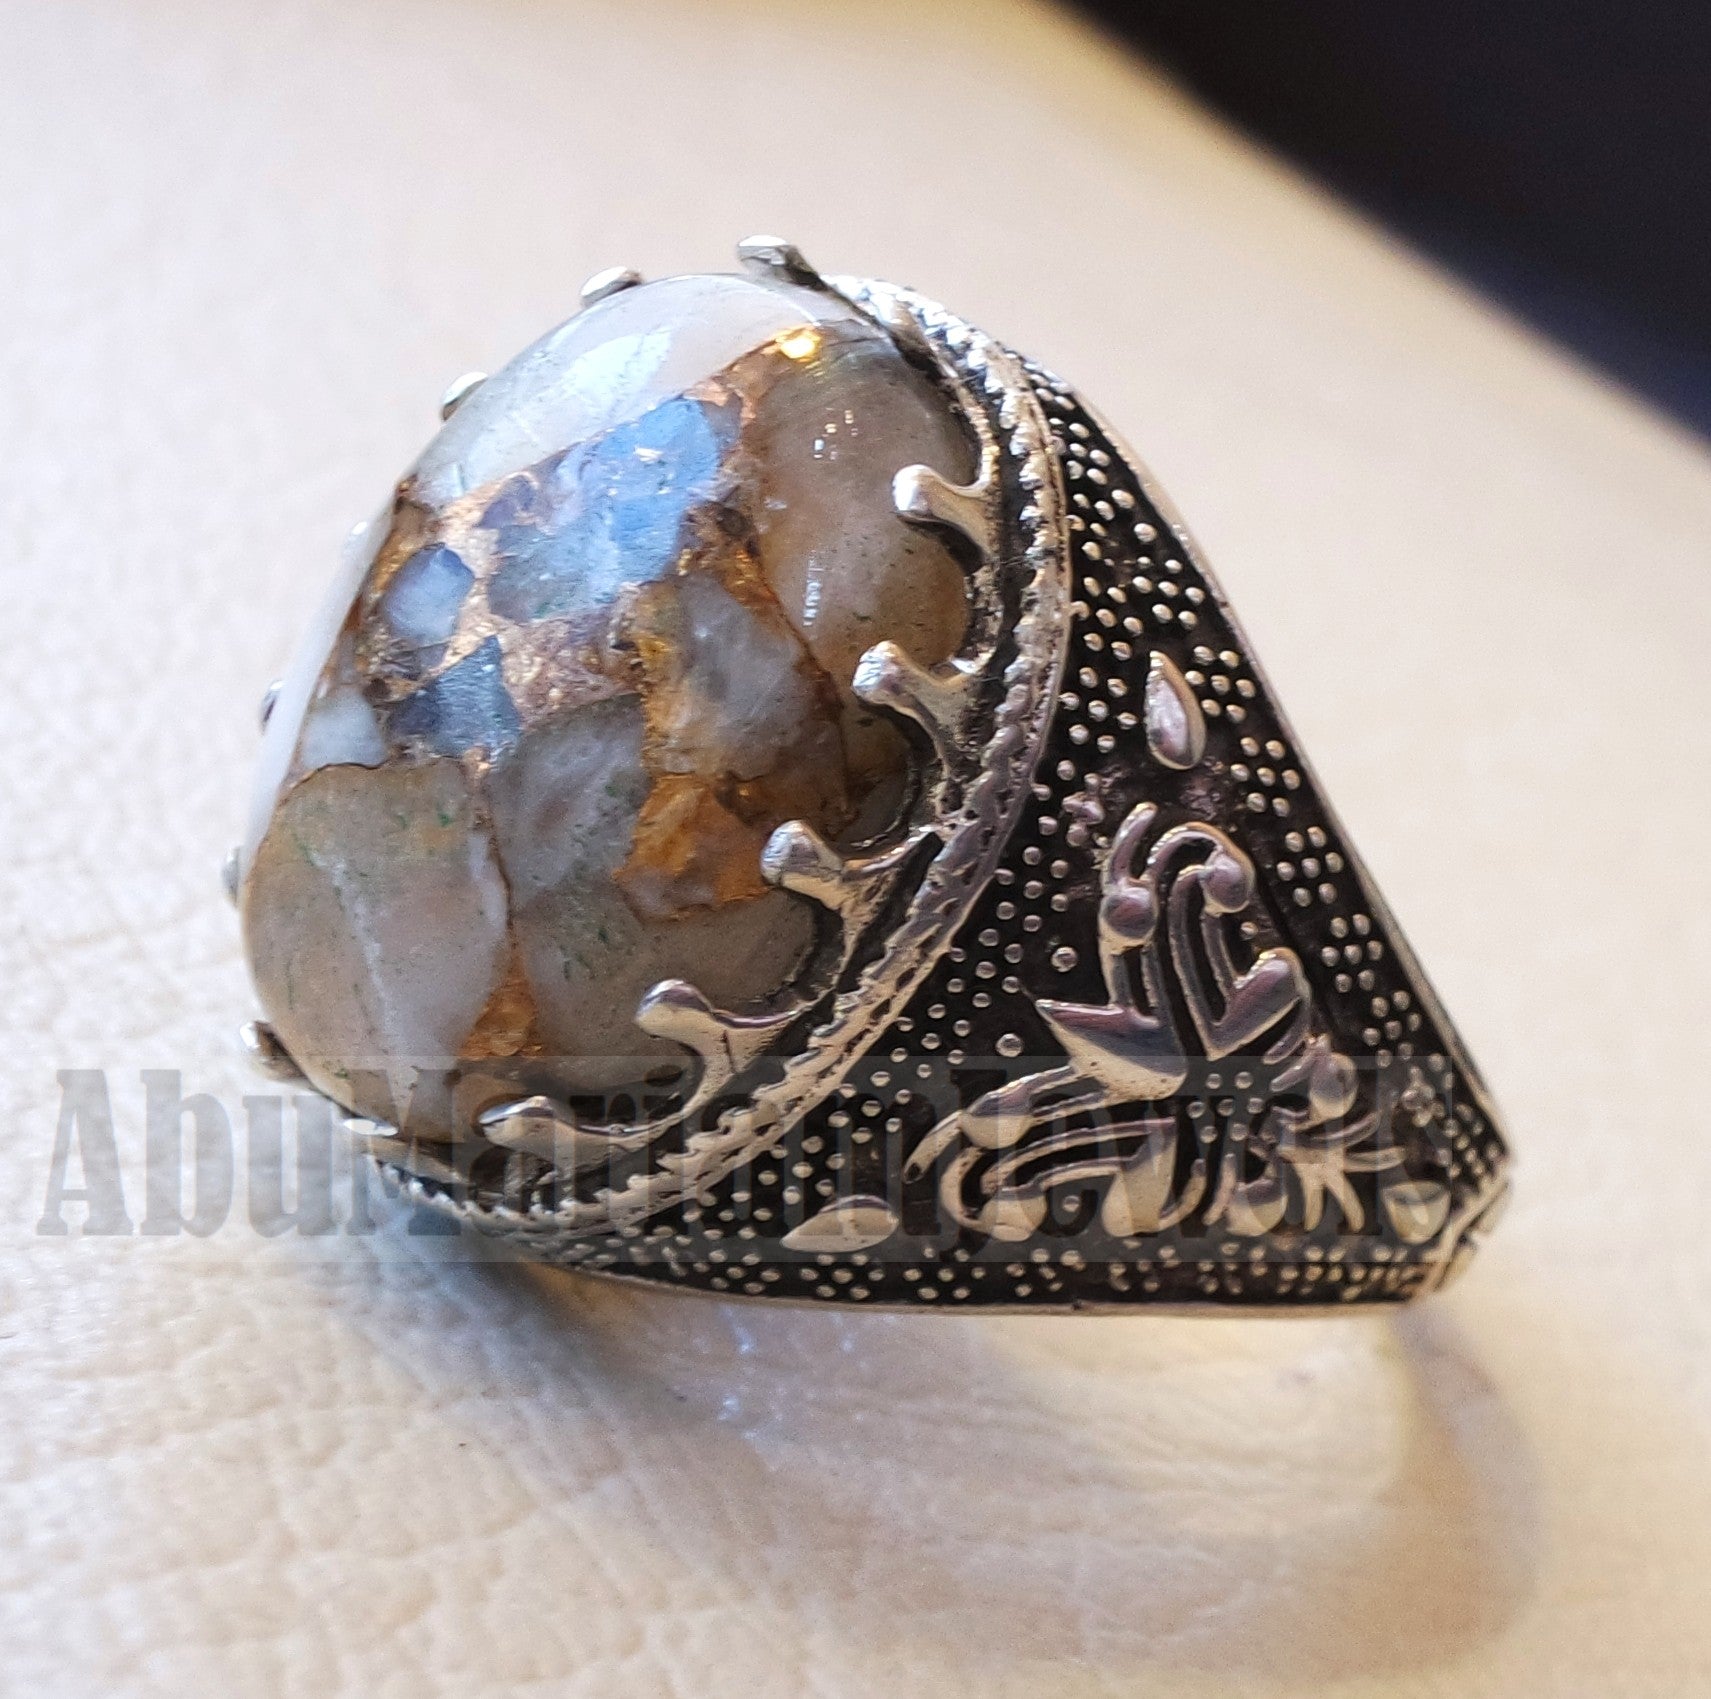 Orange copper Calcite man ring natural stone sterling silver 925 oval cabochon semi precious gem ottoman arabic style all sizes jewelry